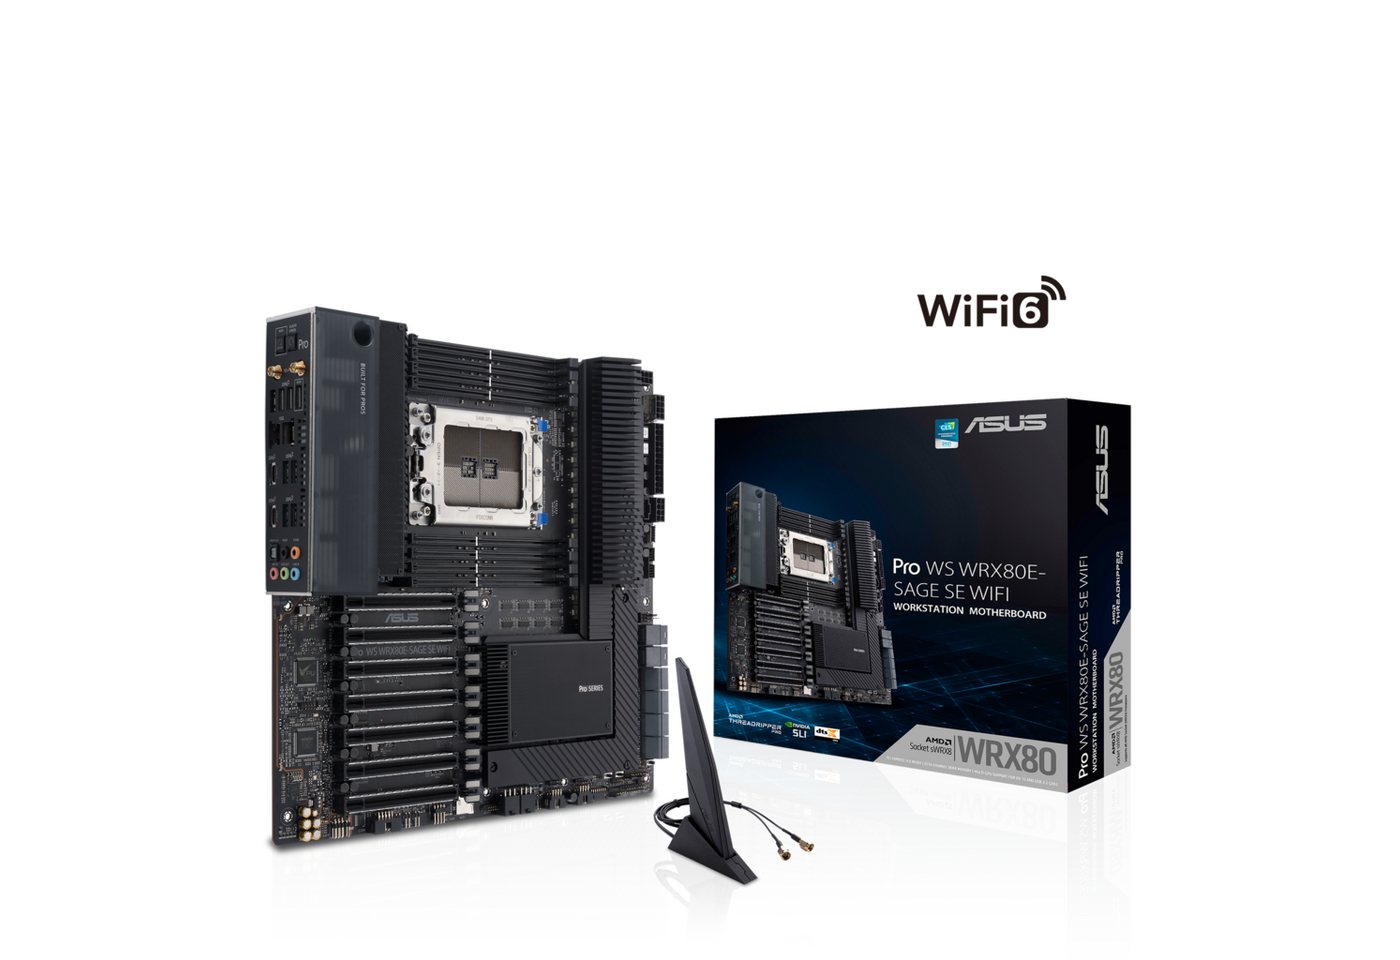 Asus PRO WS WRX80E-SAGE SE WIFI II Mainboard von Asus